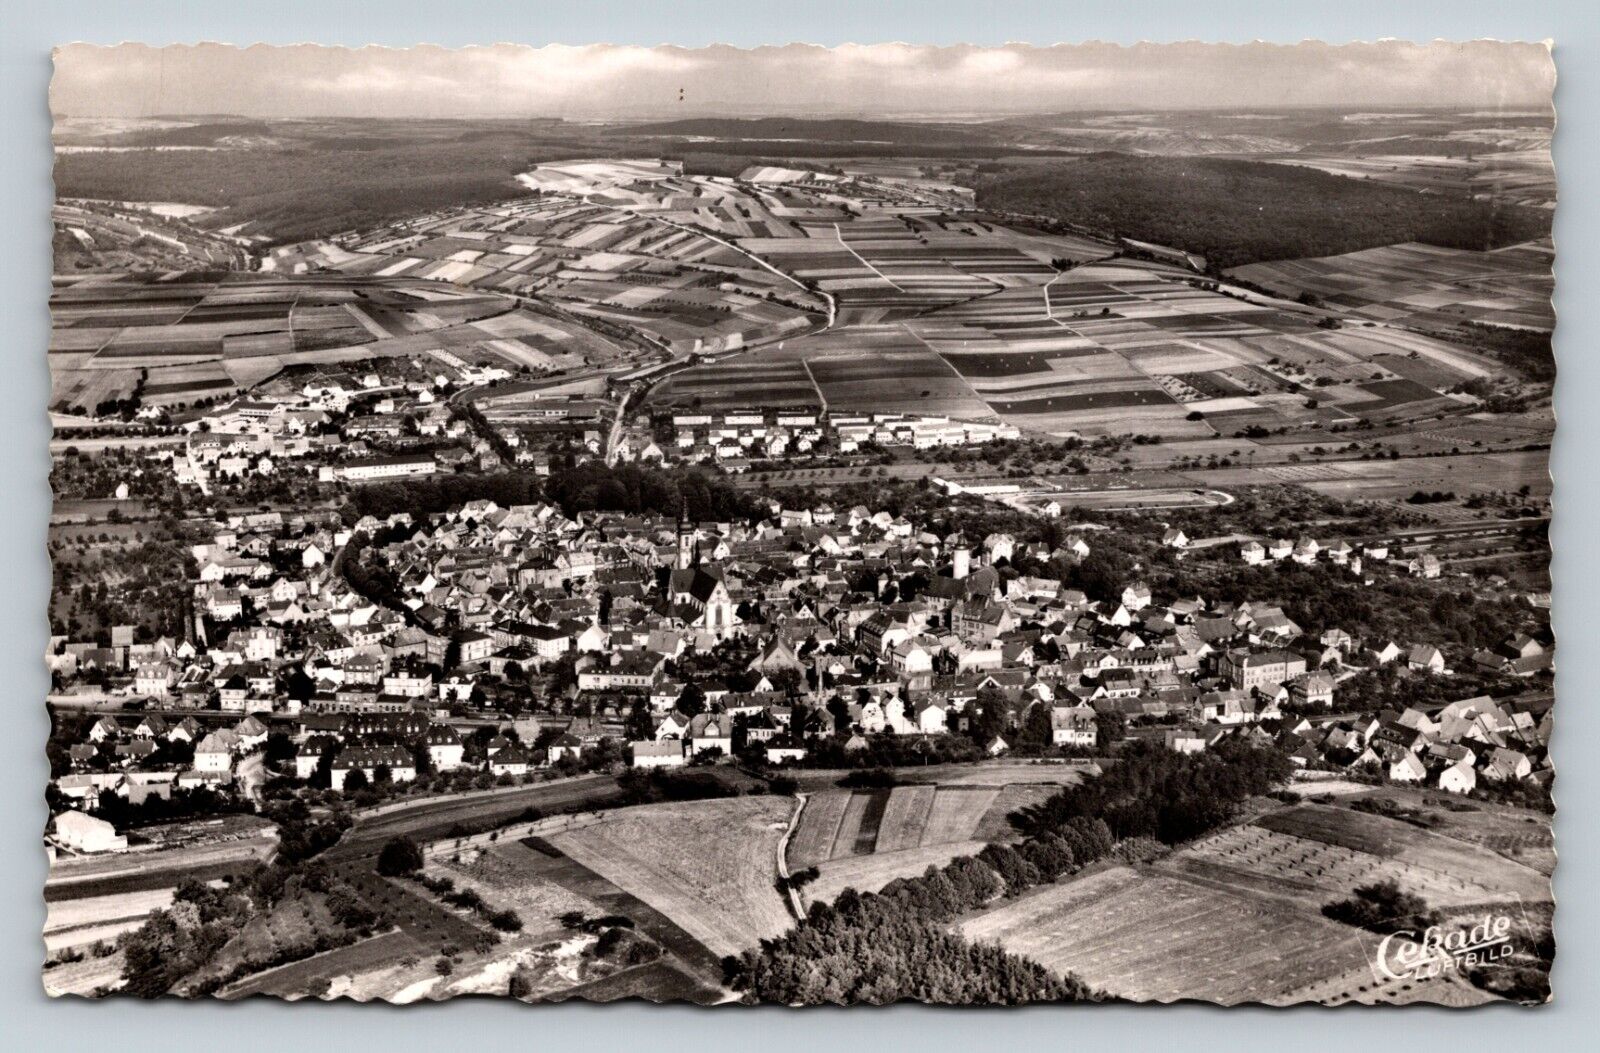 c1955 RPPC Aerial View of Tauberbischofsheim, Germany VINTAGE Postcard